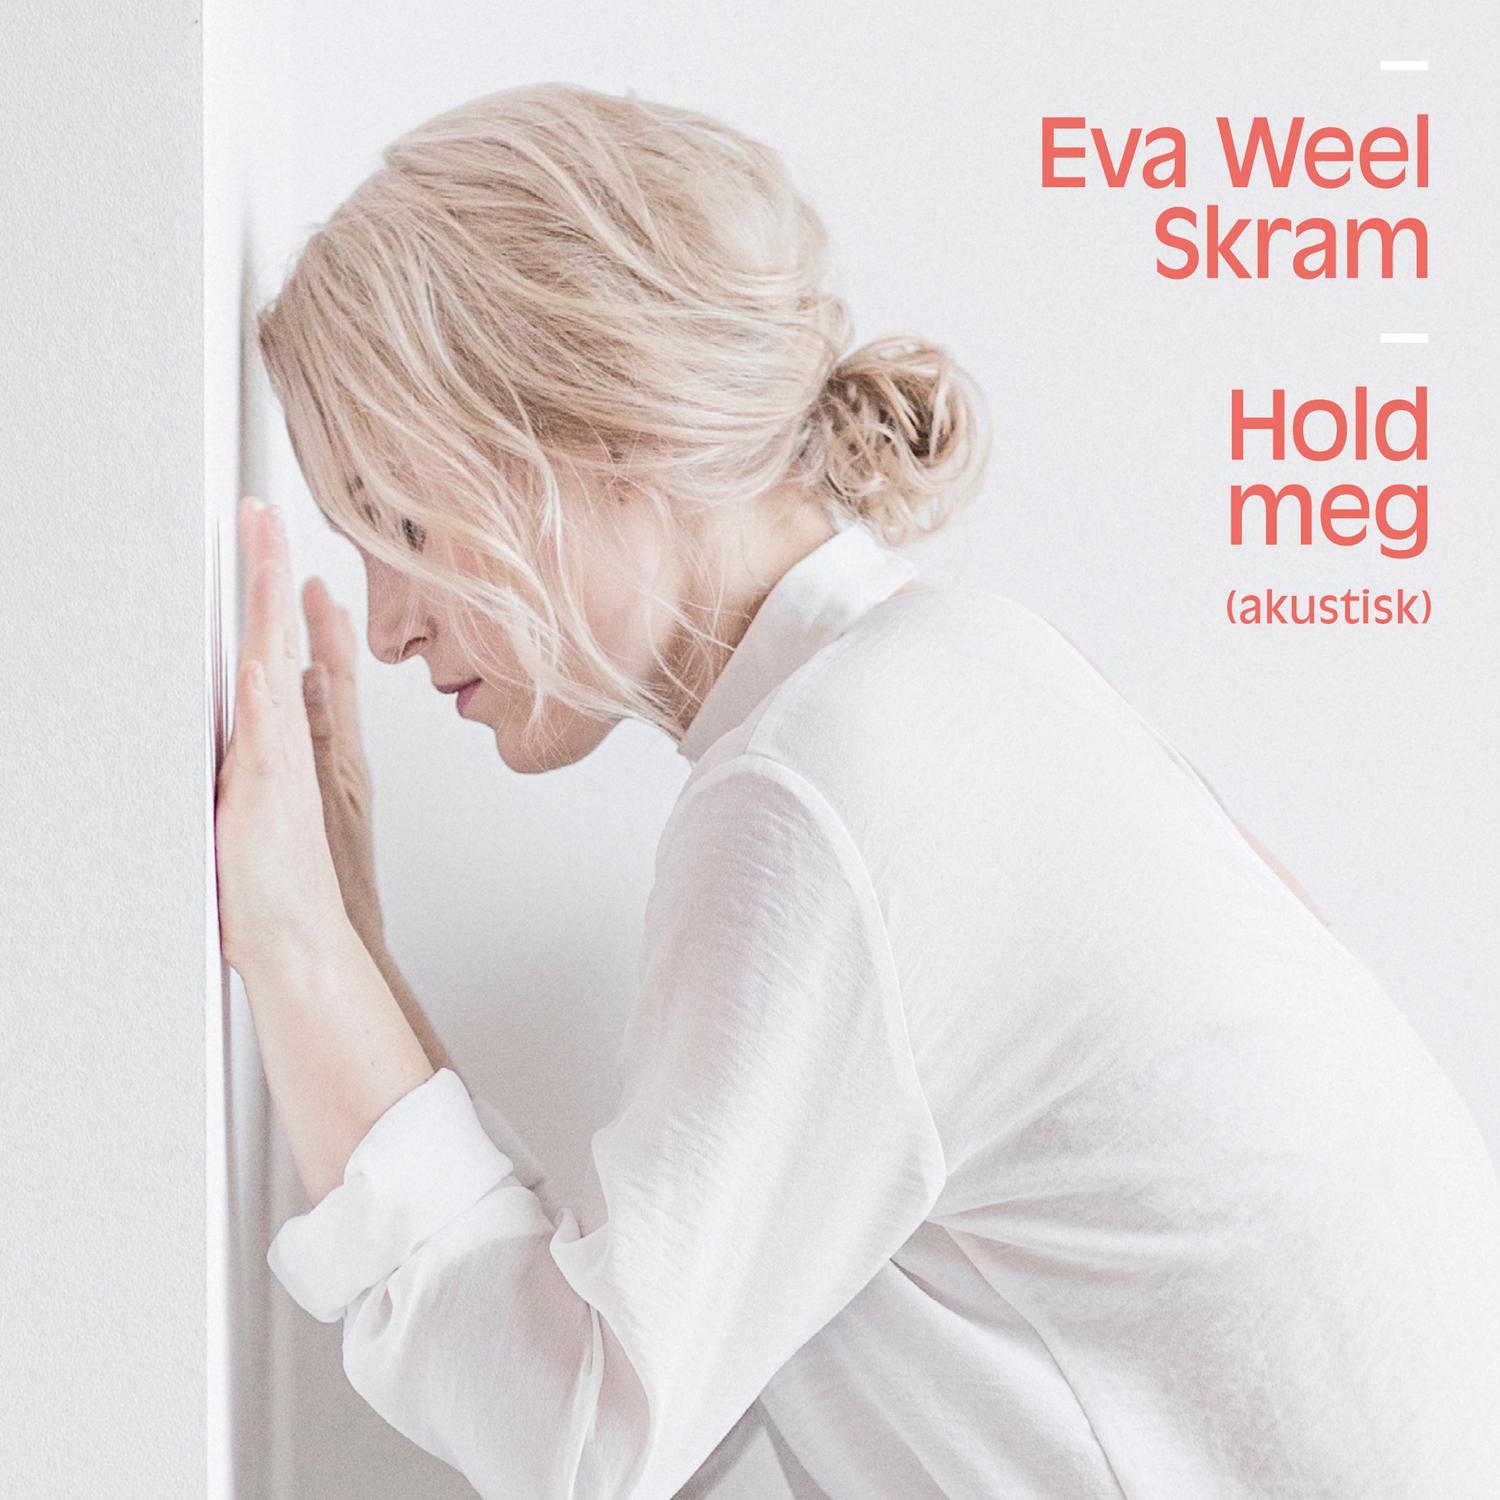 Eva Weel Skram - Hold meg (Akustisk)